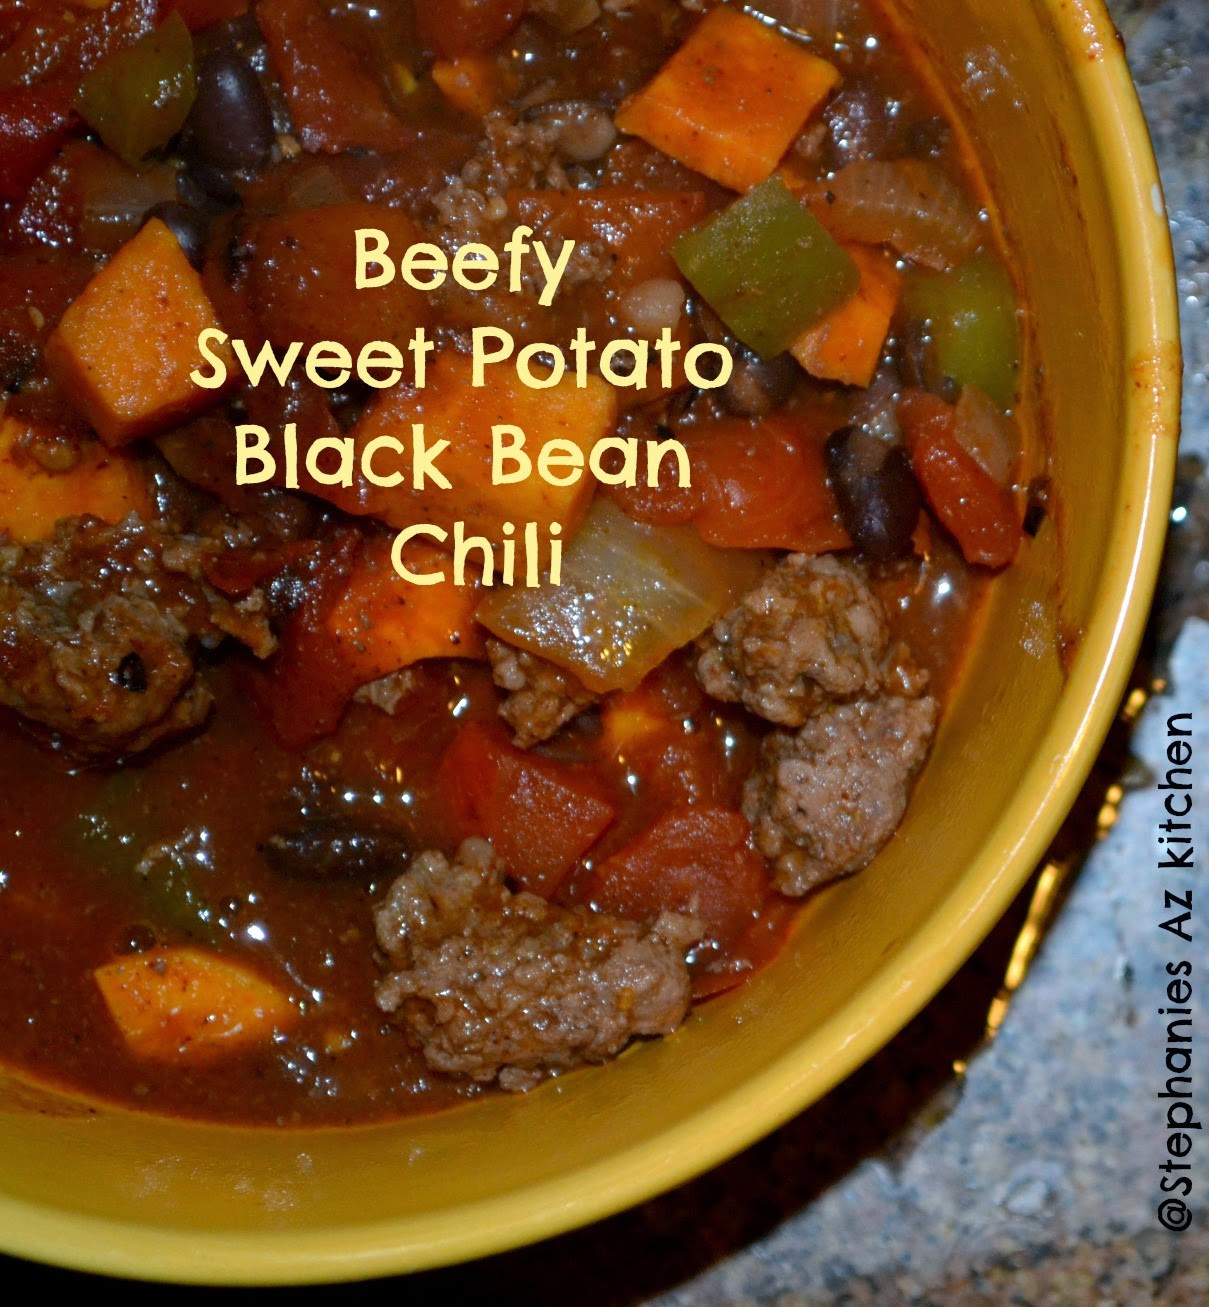 Sweet Potato Black Bean Chili
 HealthyEatsGirl Beefy Sweet Potato Black Bean Chili